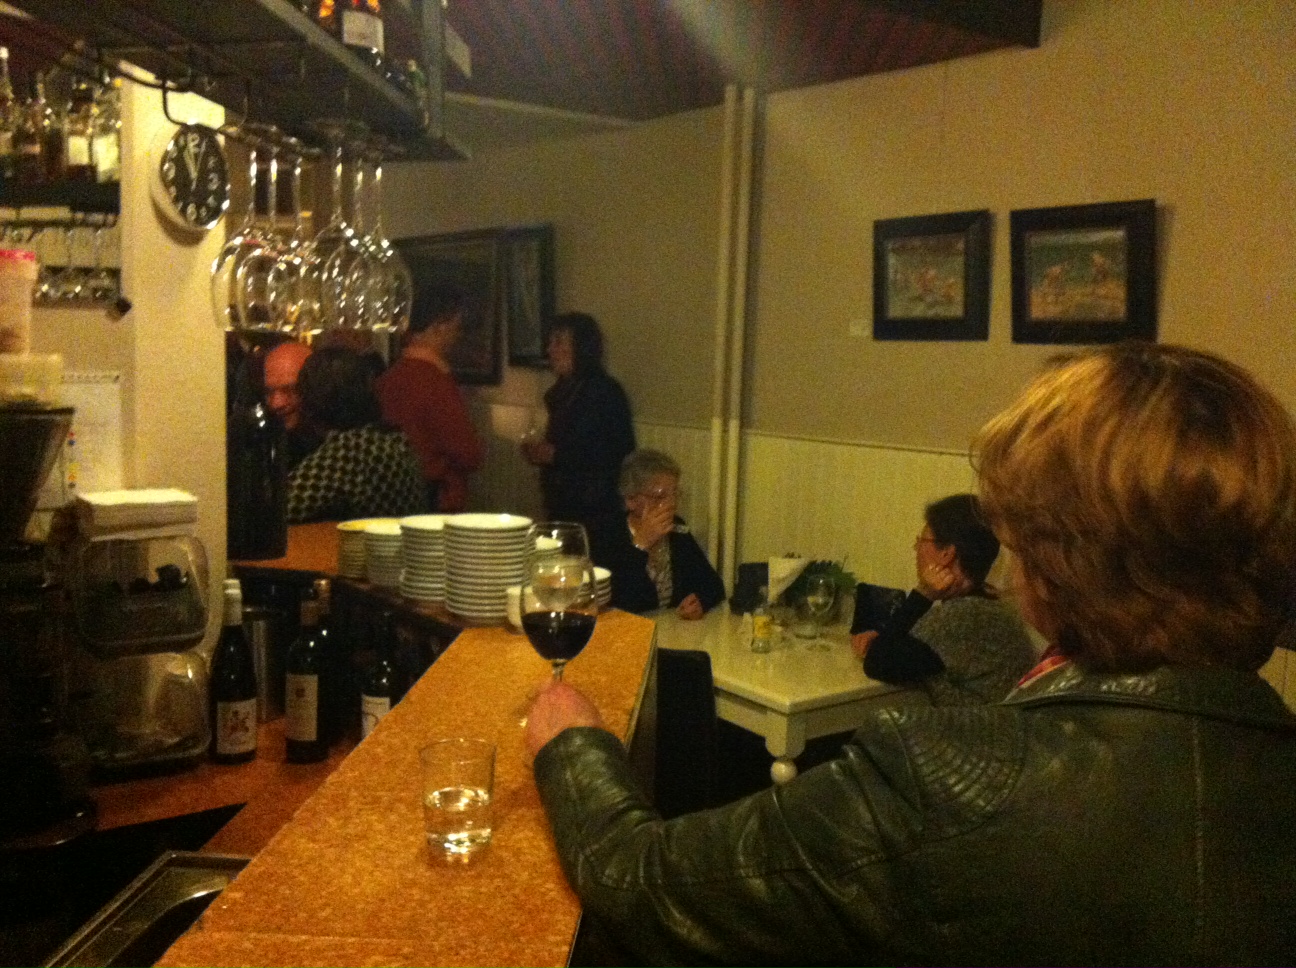 singlecafe in brasserie van Rest.Kawop,Markt 23,Lochem 18-1-14